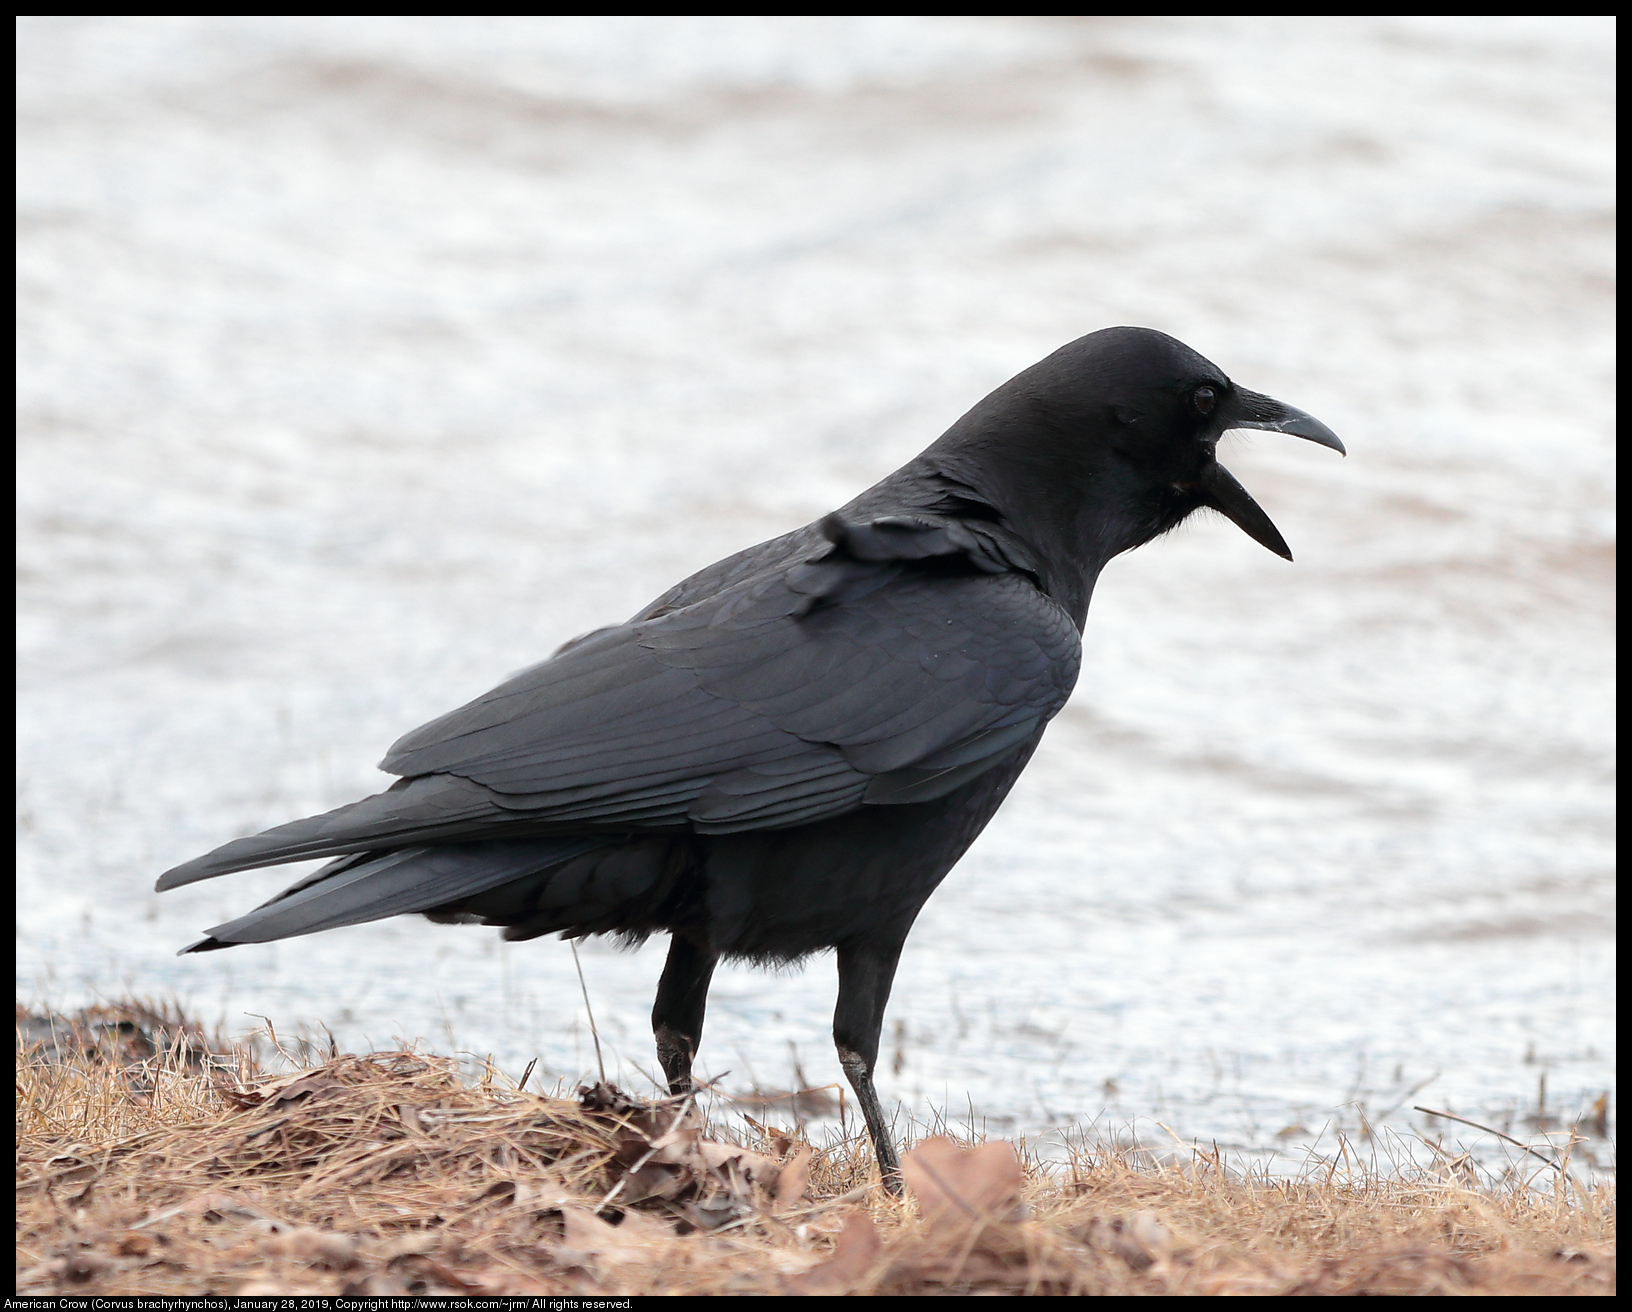 American Crow (Corvus brachyrhynchos), January 28, 2019